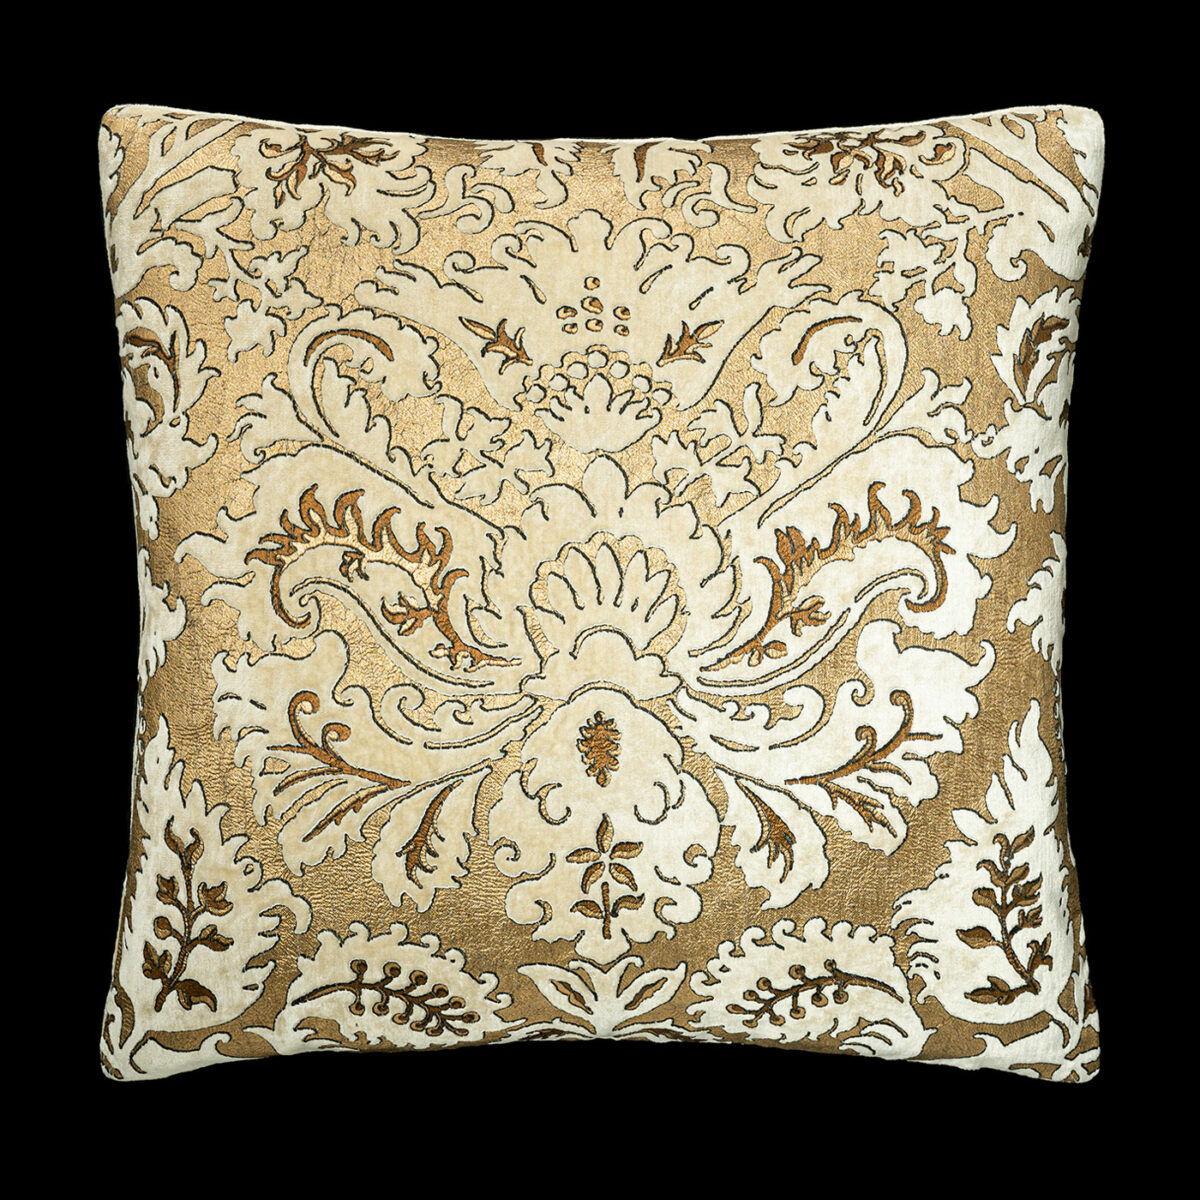 Delphos cushion